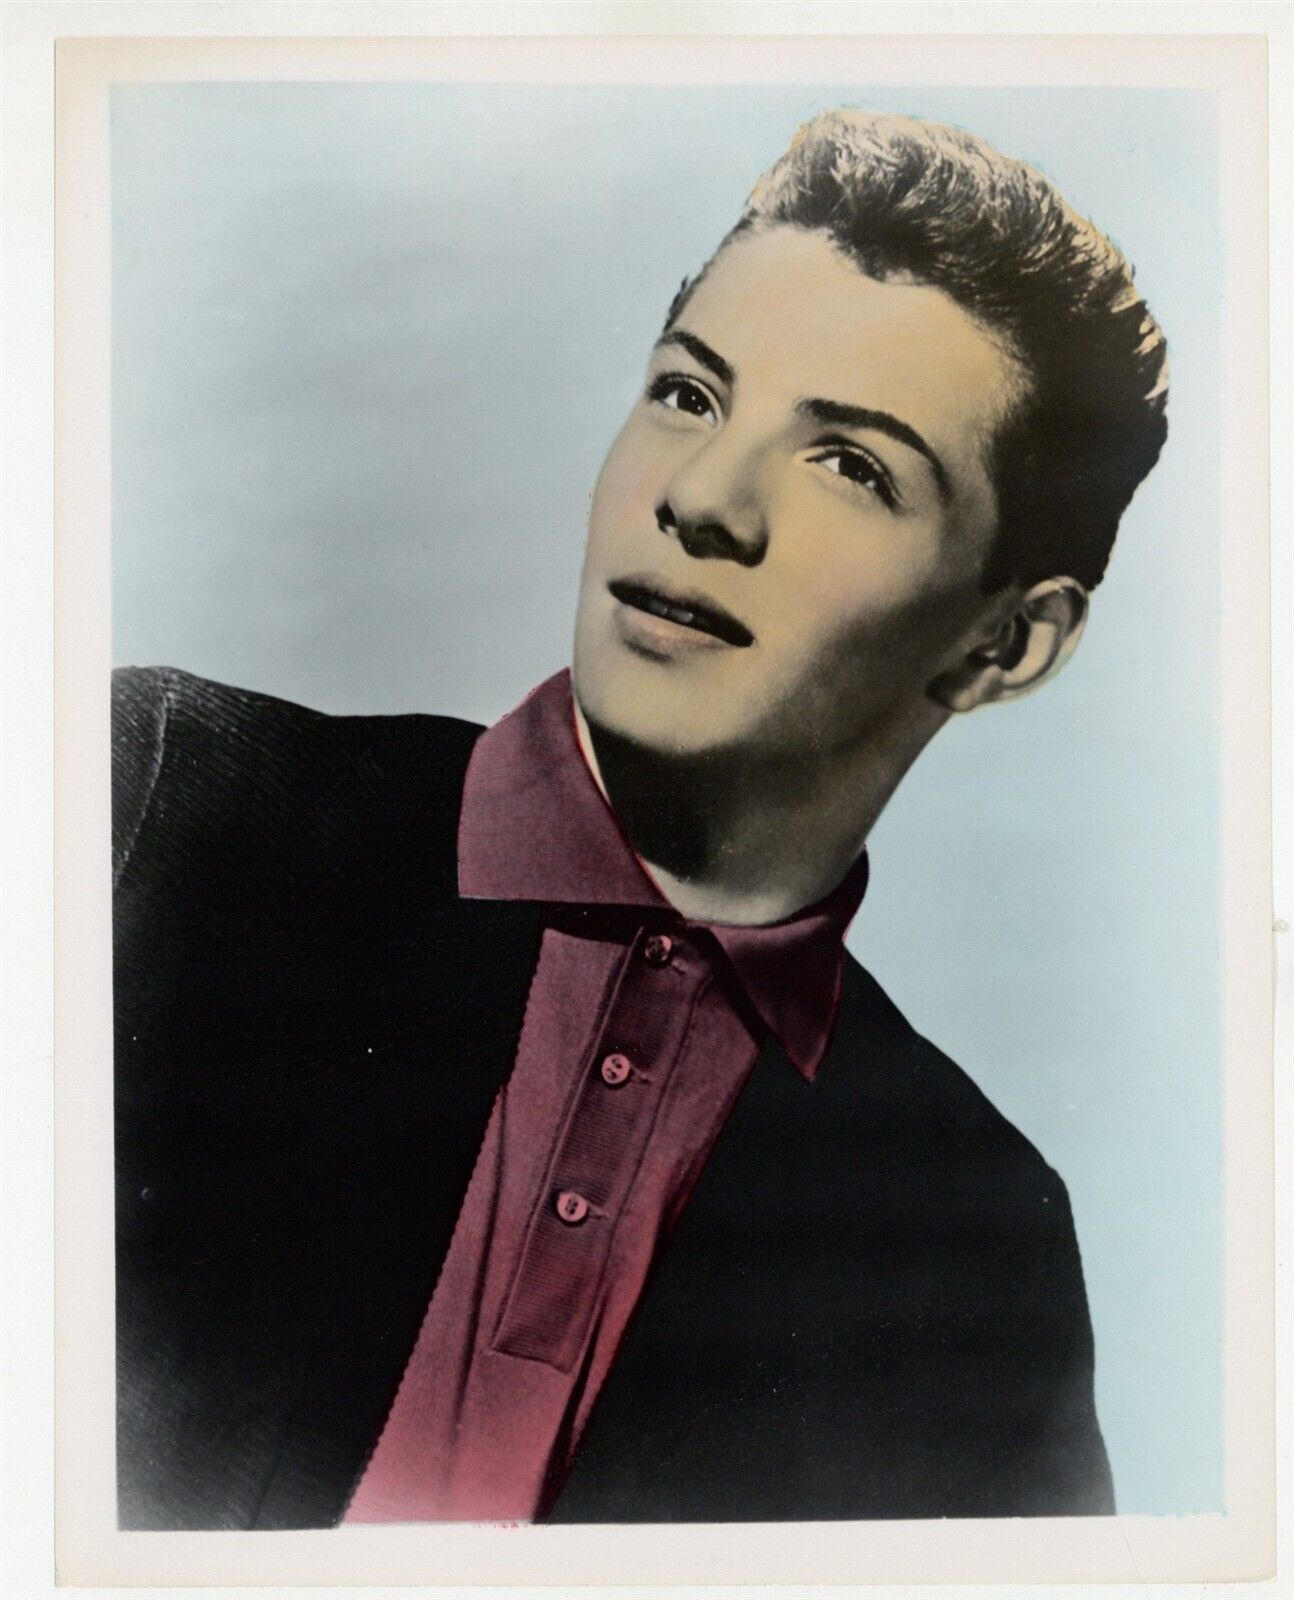 Frankie Avalon 1958 Color Portrait Hunk Soul Singer Doo Wop Jersey Boy J9850